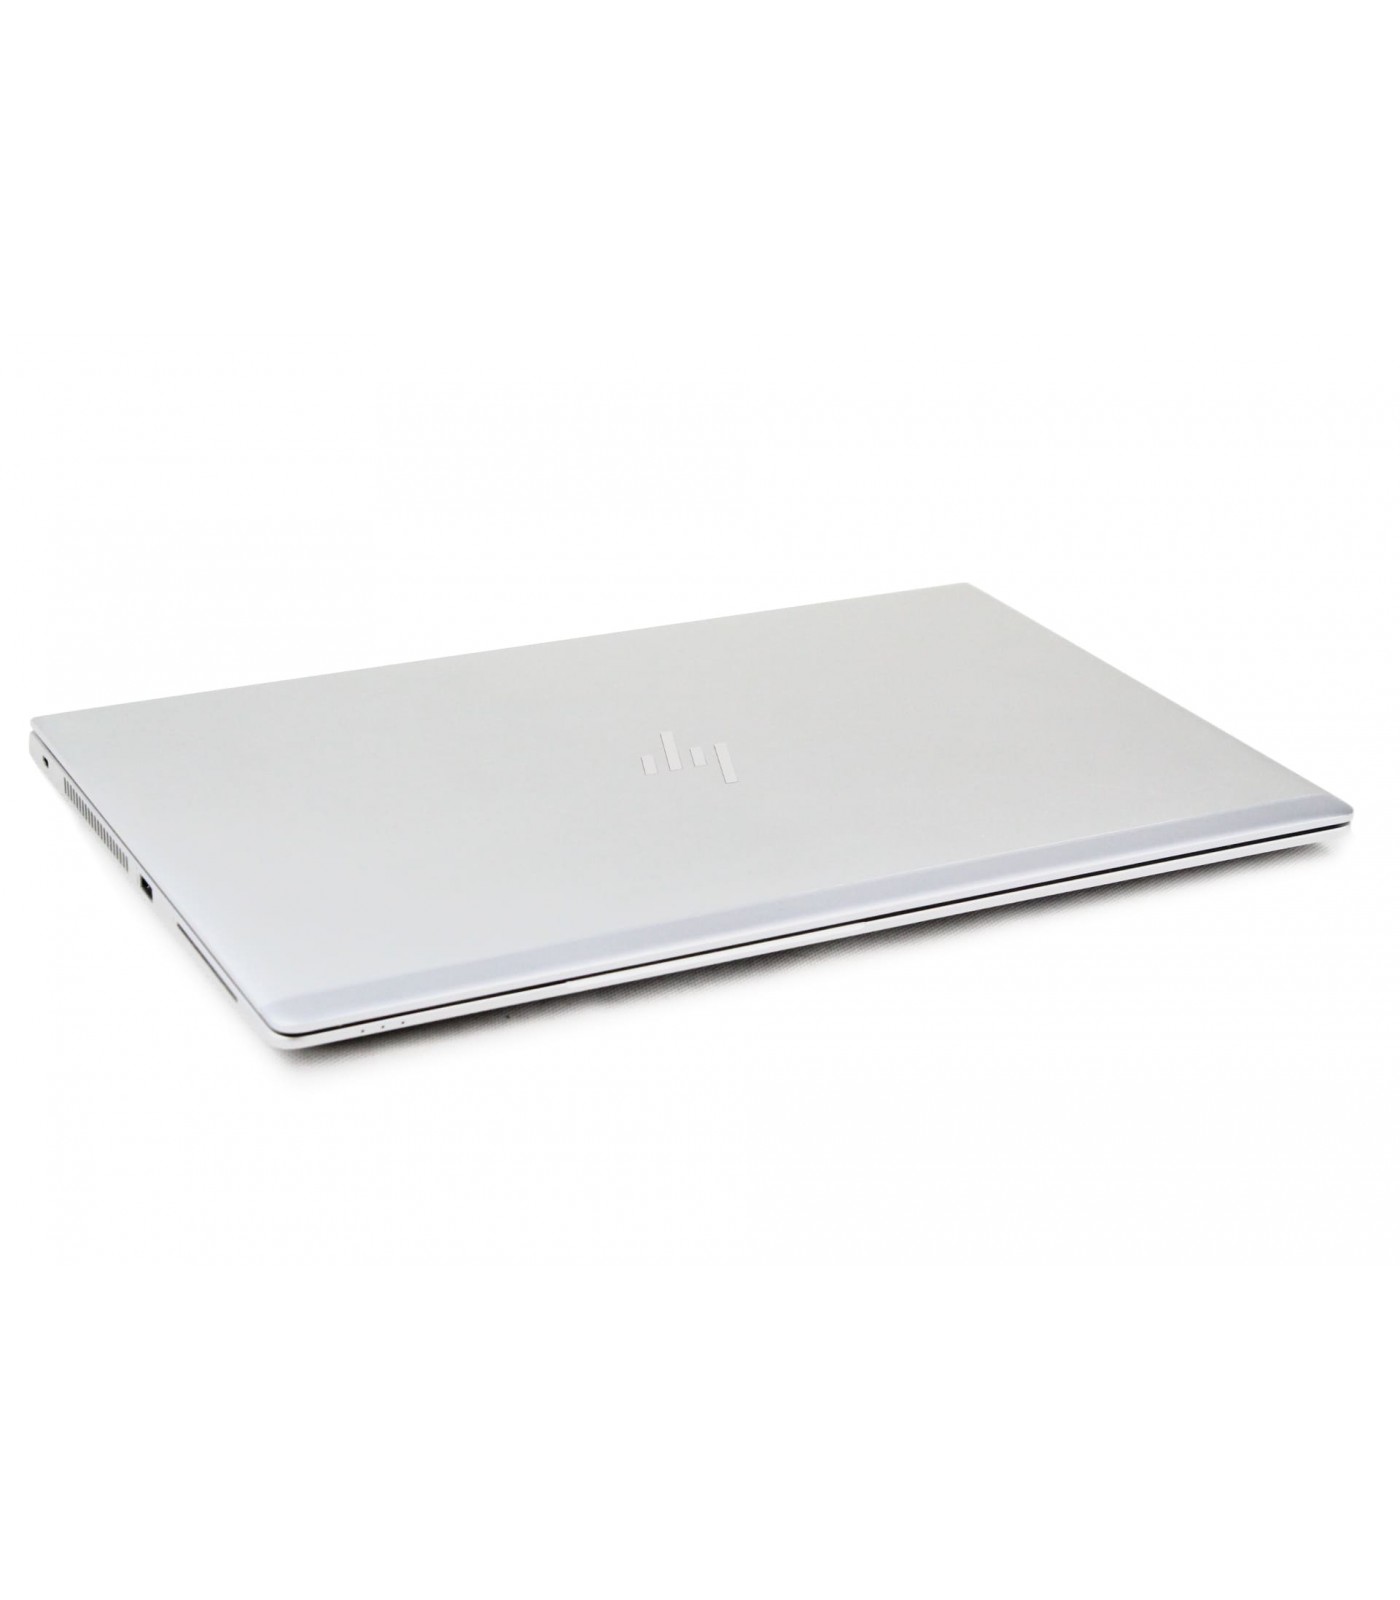 Poleasingowy Laptop HP Elitebook 850 G5 z ekranem FullHD